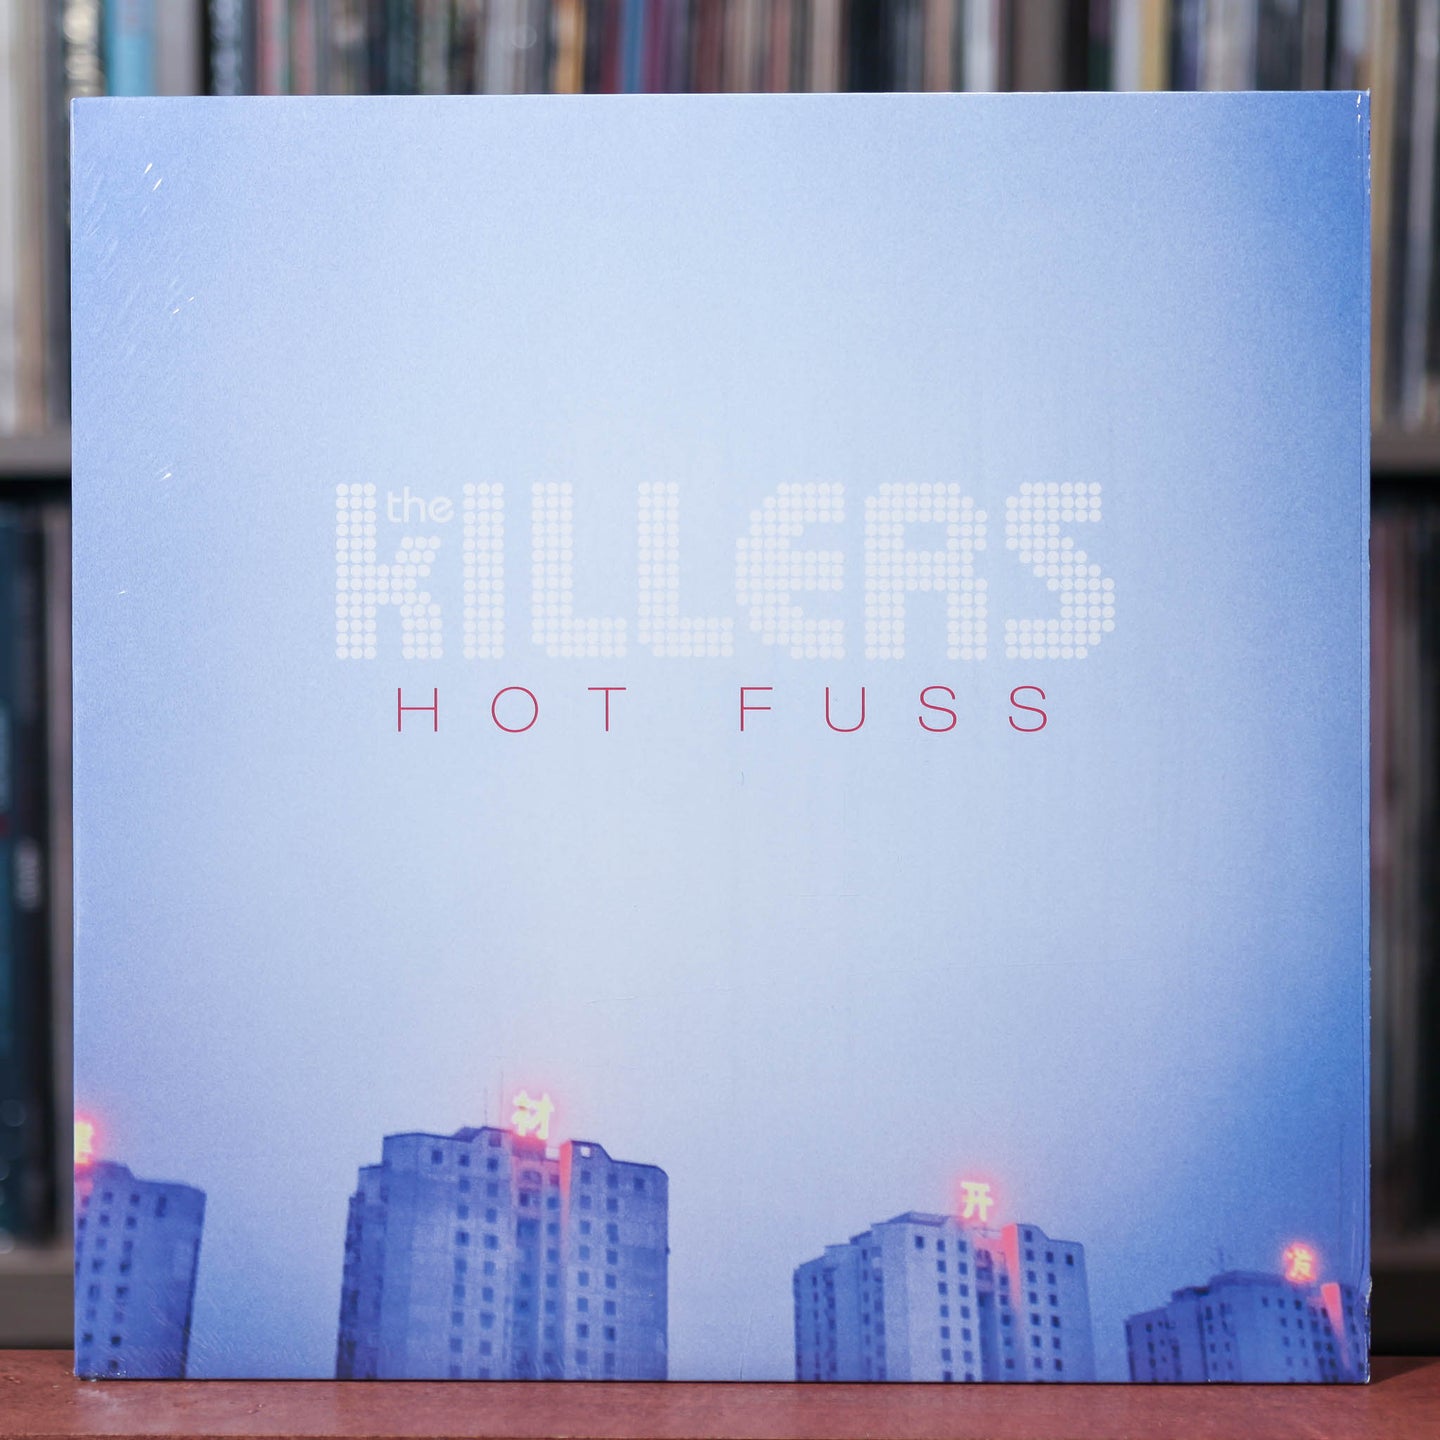 The Killers - Hot Fuss - Translucent Orange Vinyl - 2018 Island, NM/NM w/ Shrink